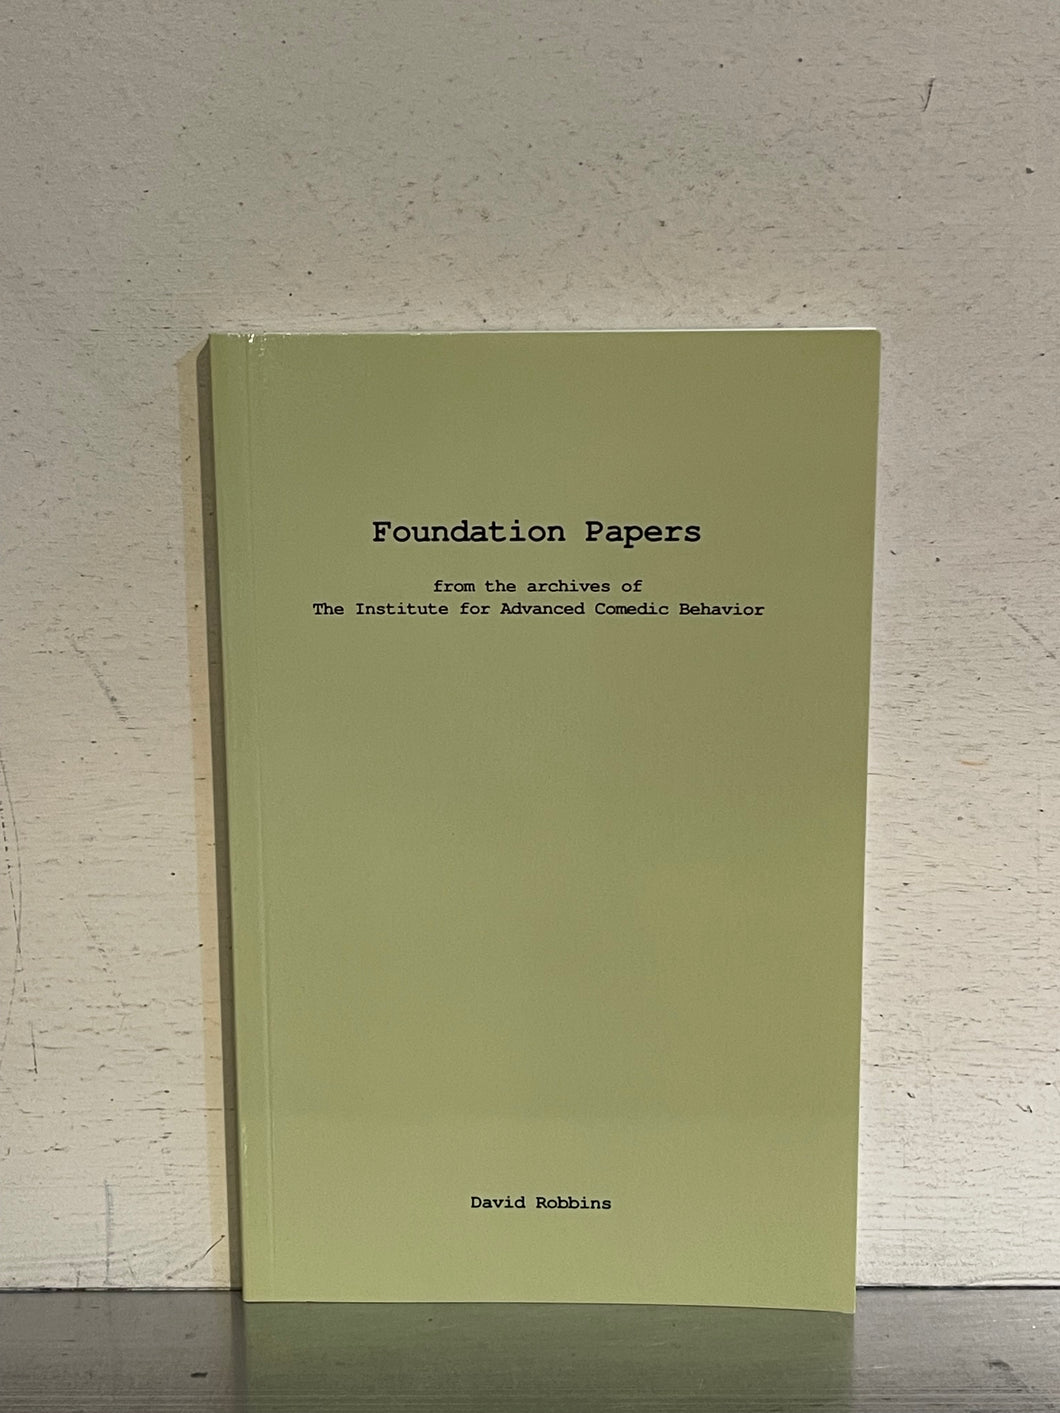 Foundation papers: David Robbins